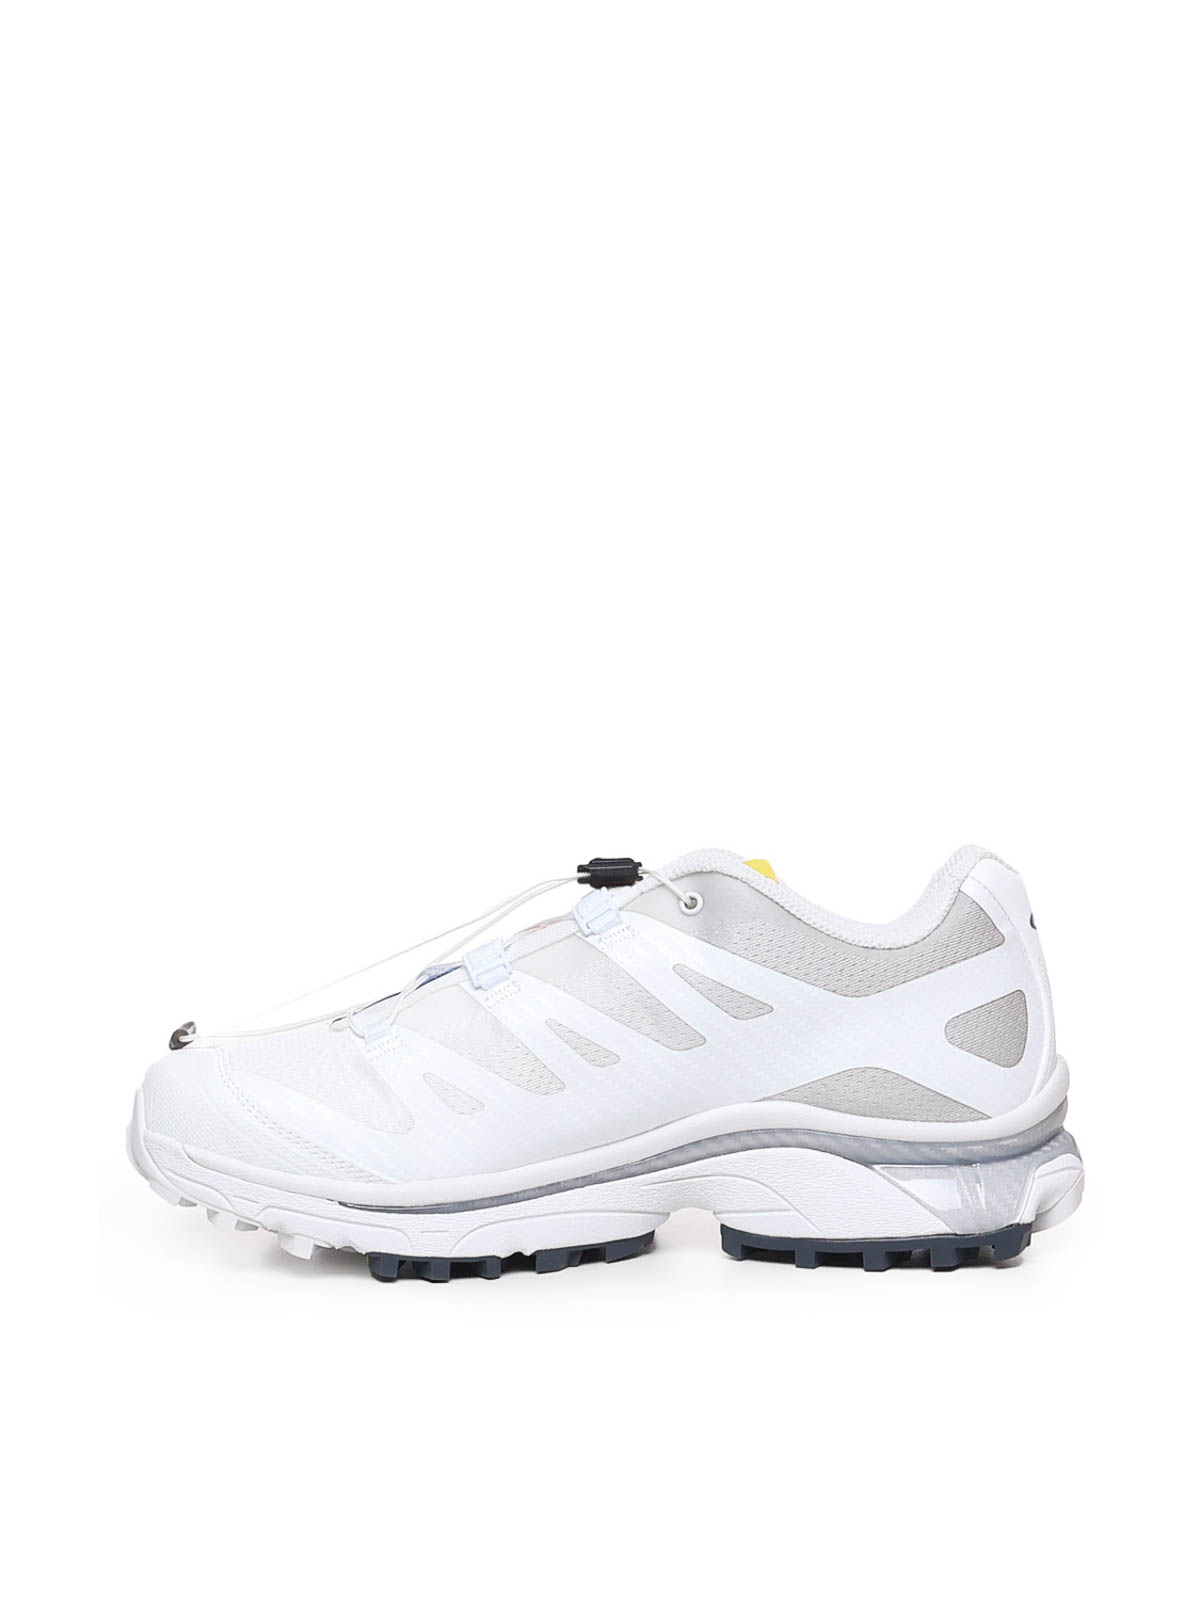 Shop Salomon Xt-4 White Sneakers In Grey